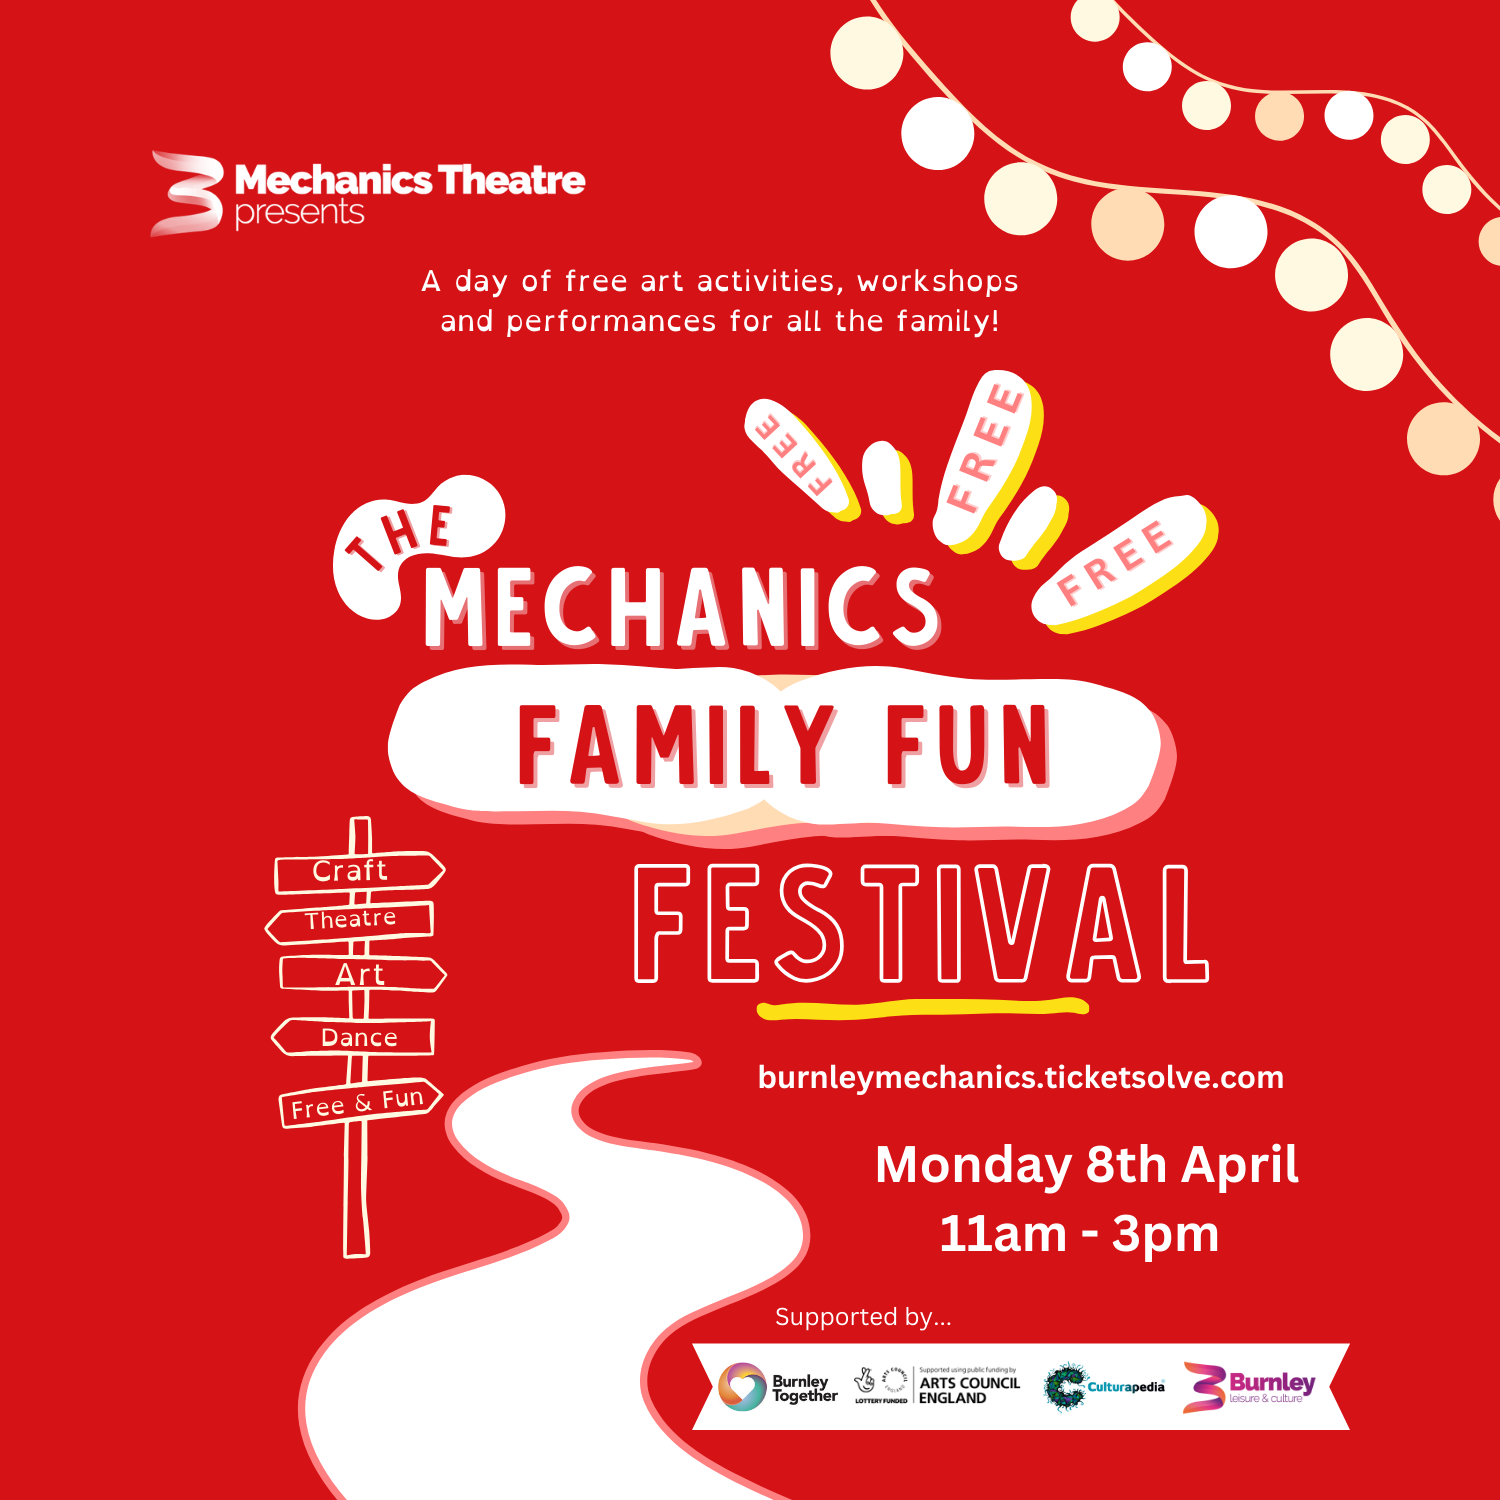 The Mechanics Theatre Family Fun Festival